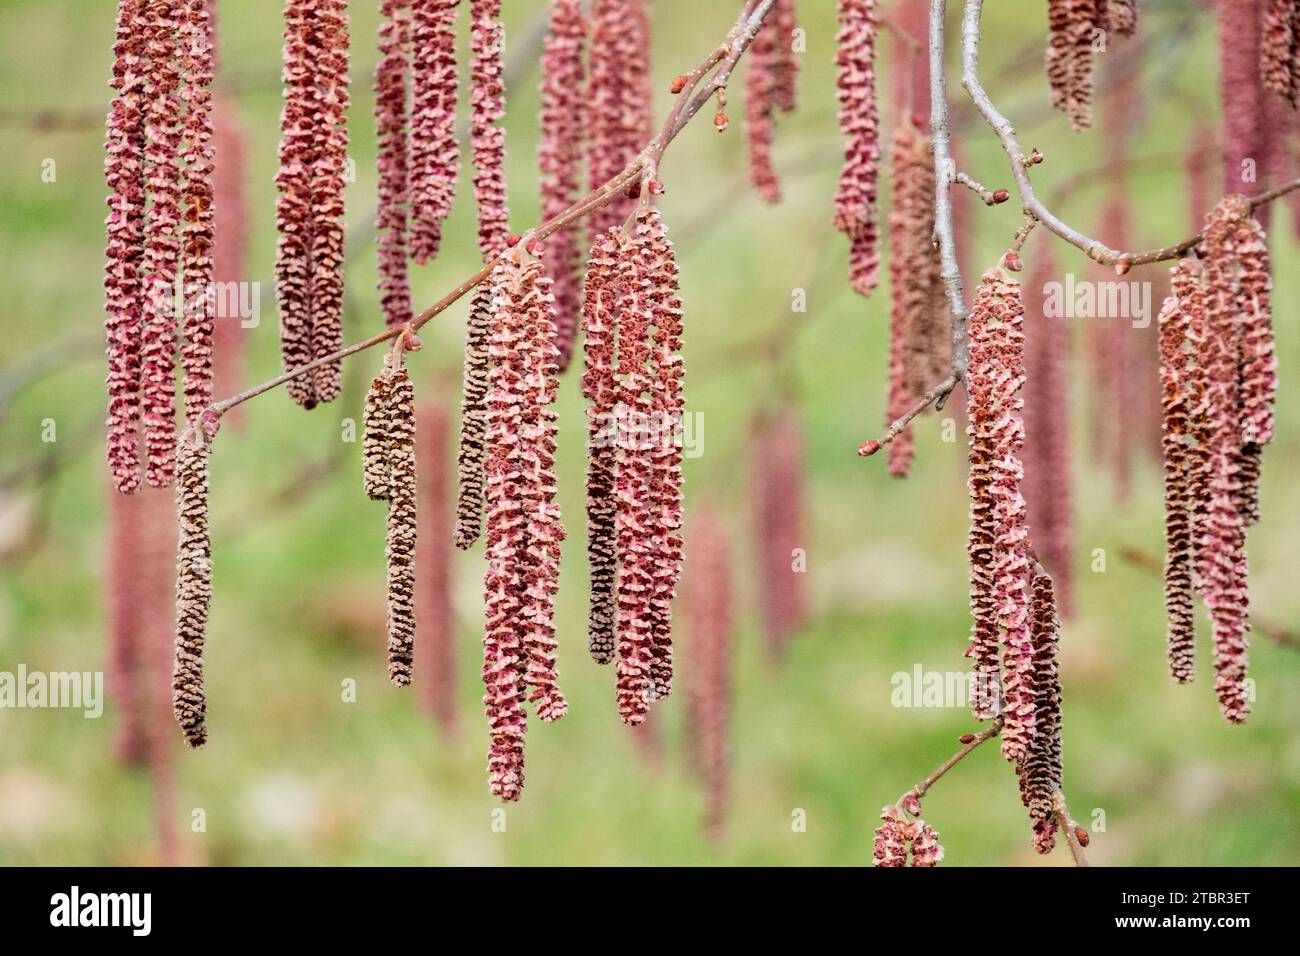 Red Filbert Corylus maxima „Rote Zeller“ Aments Februar blühender Sträucher Catkins Zweige blühende Pflanze Zweige blühte auf Zweigen langer Blumengarten Stockfoto